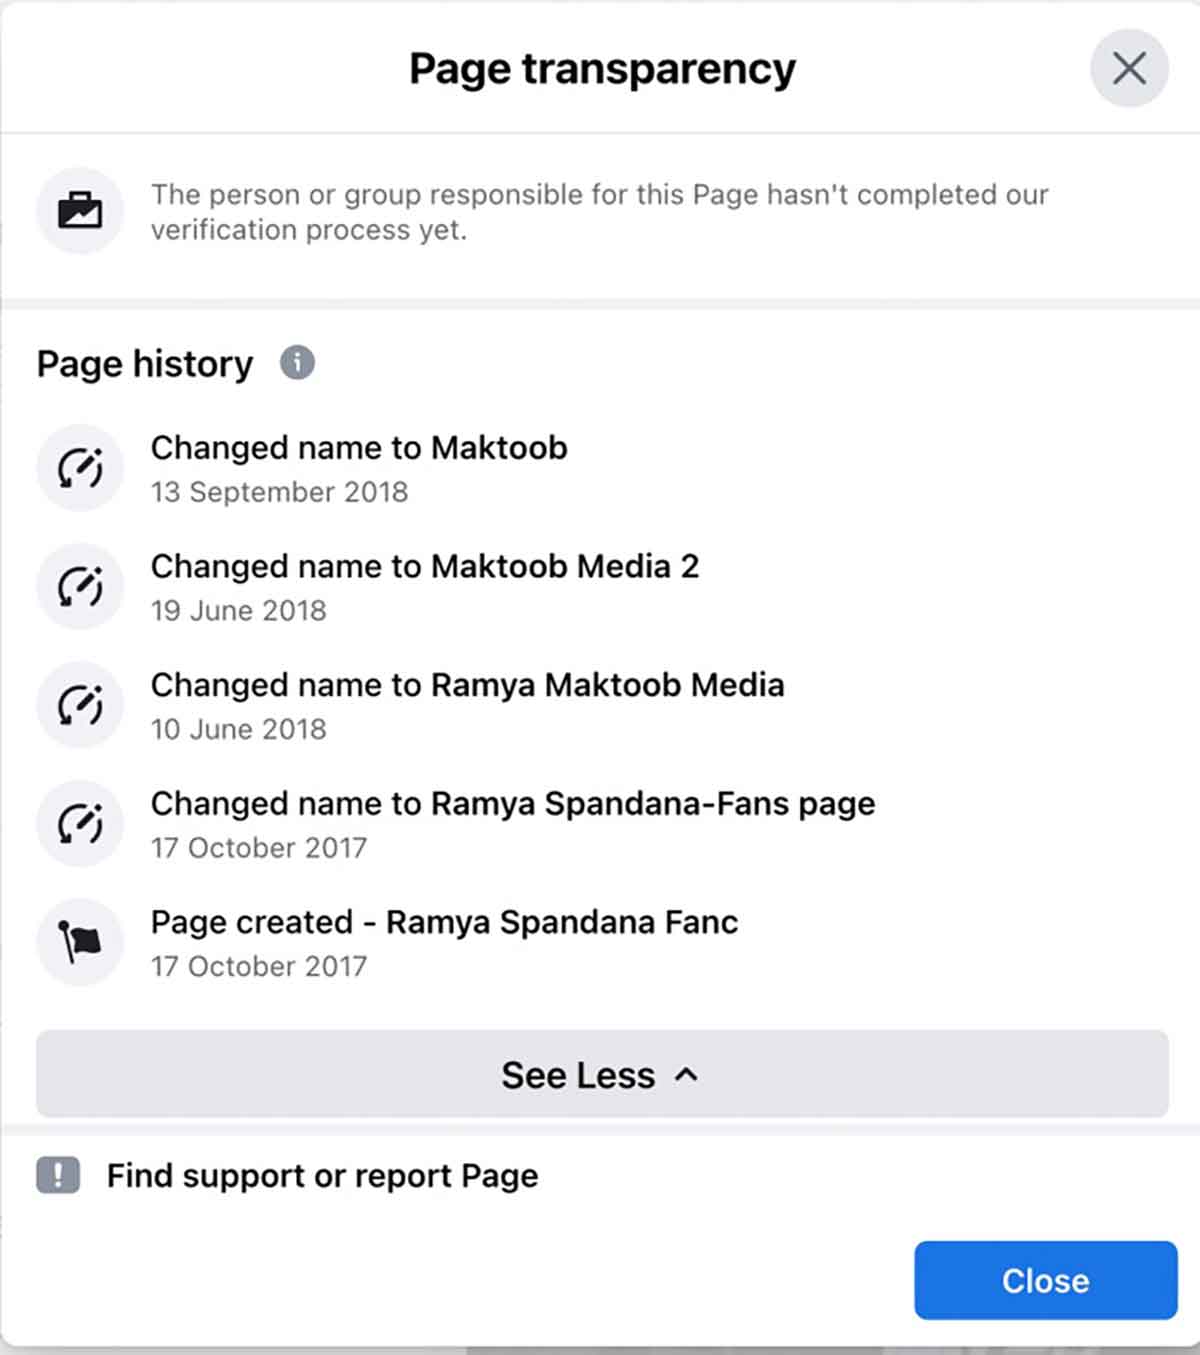 The page history of Maktoob media on Facebook